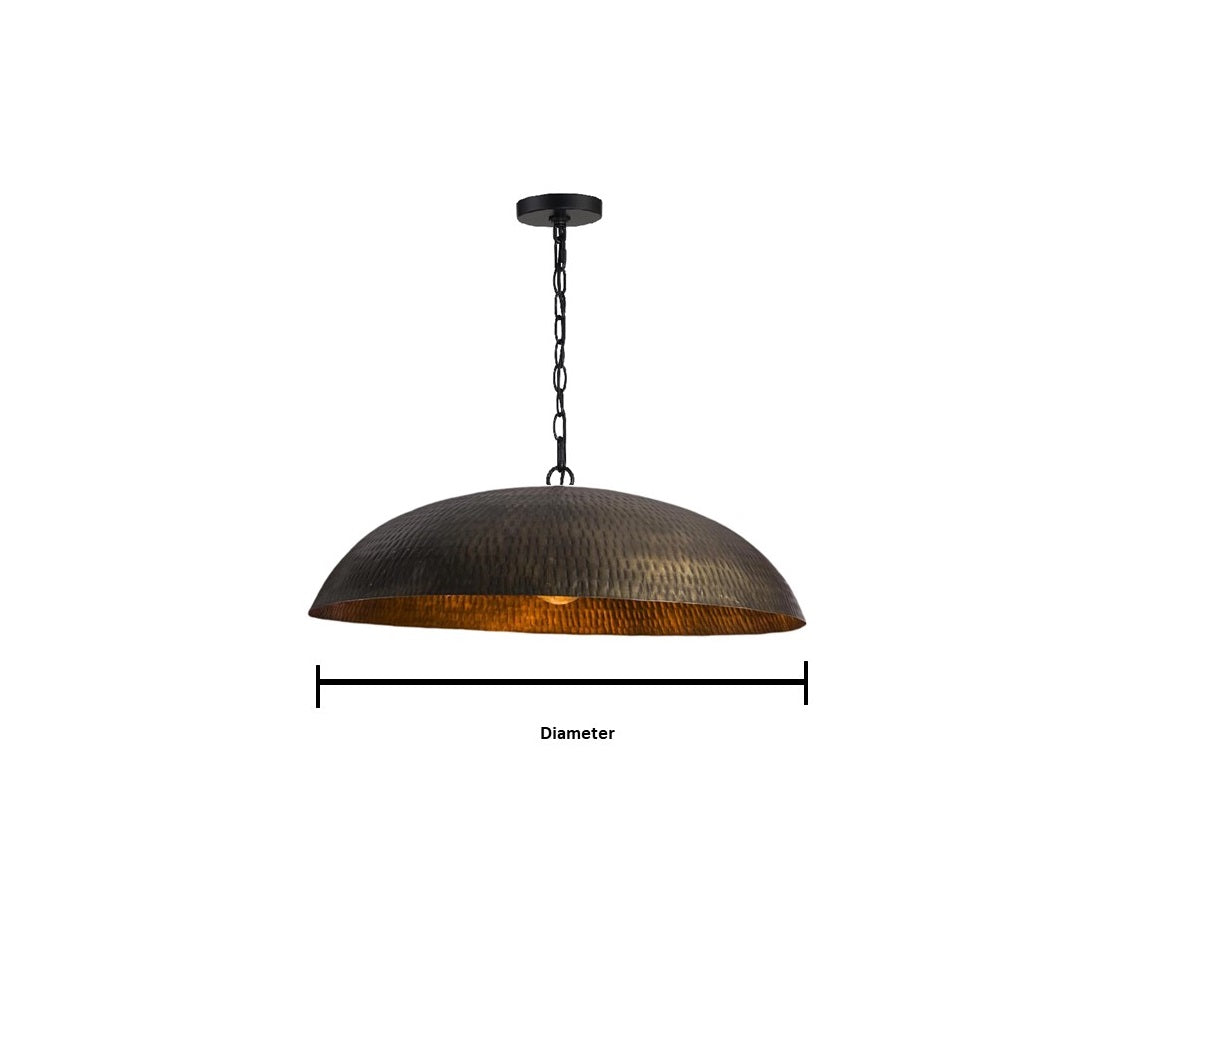 Hammered Black Dome Brass Pendant Light Lampshade Ceiling Light Kitchen Island light Lampshade Art decor